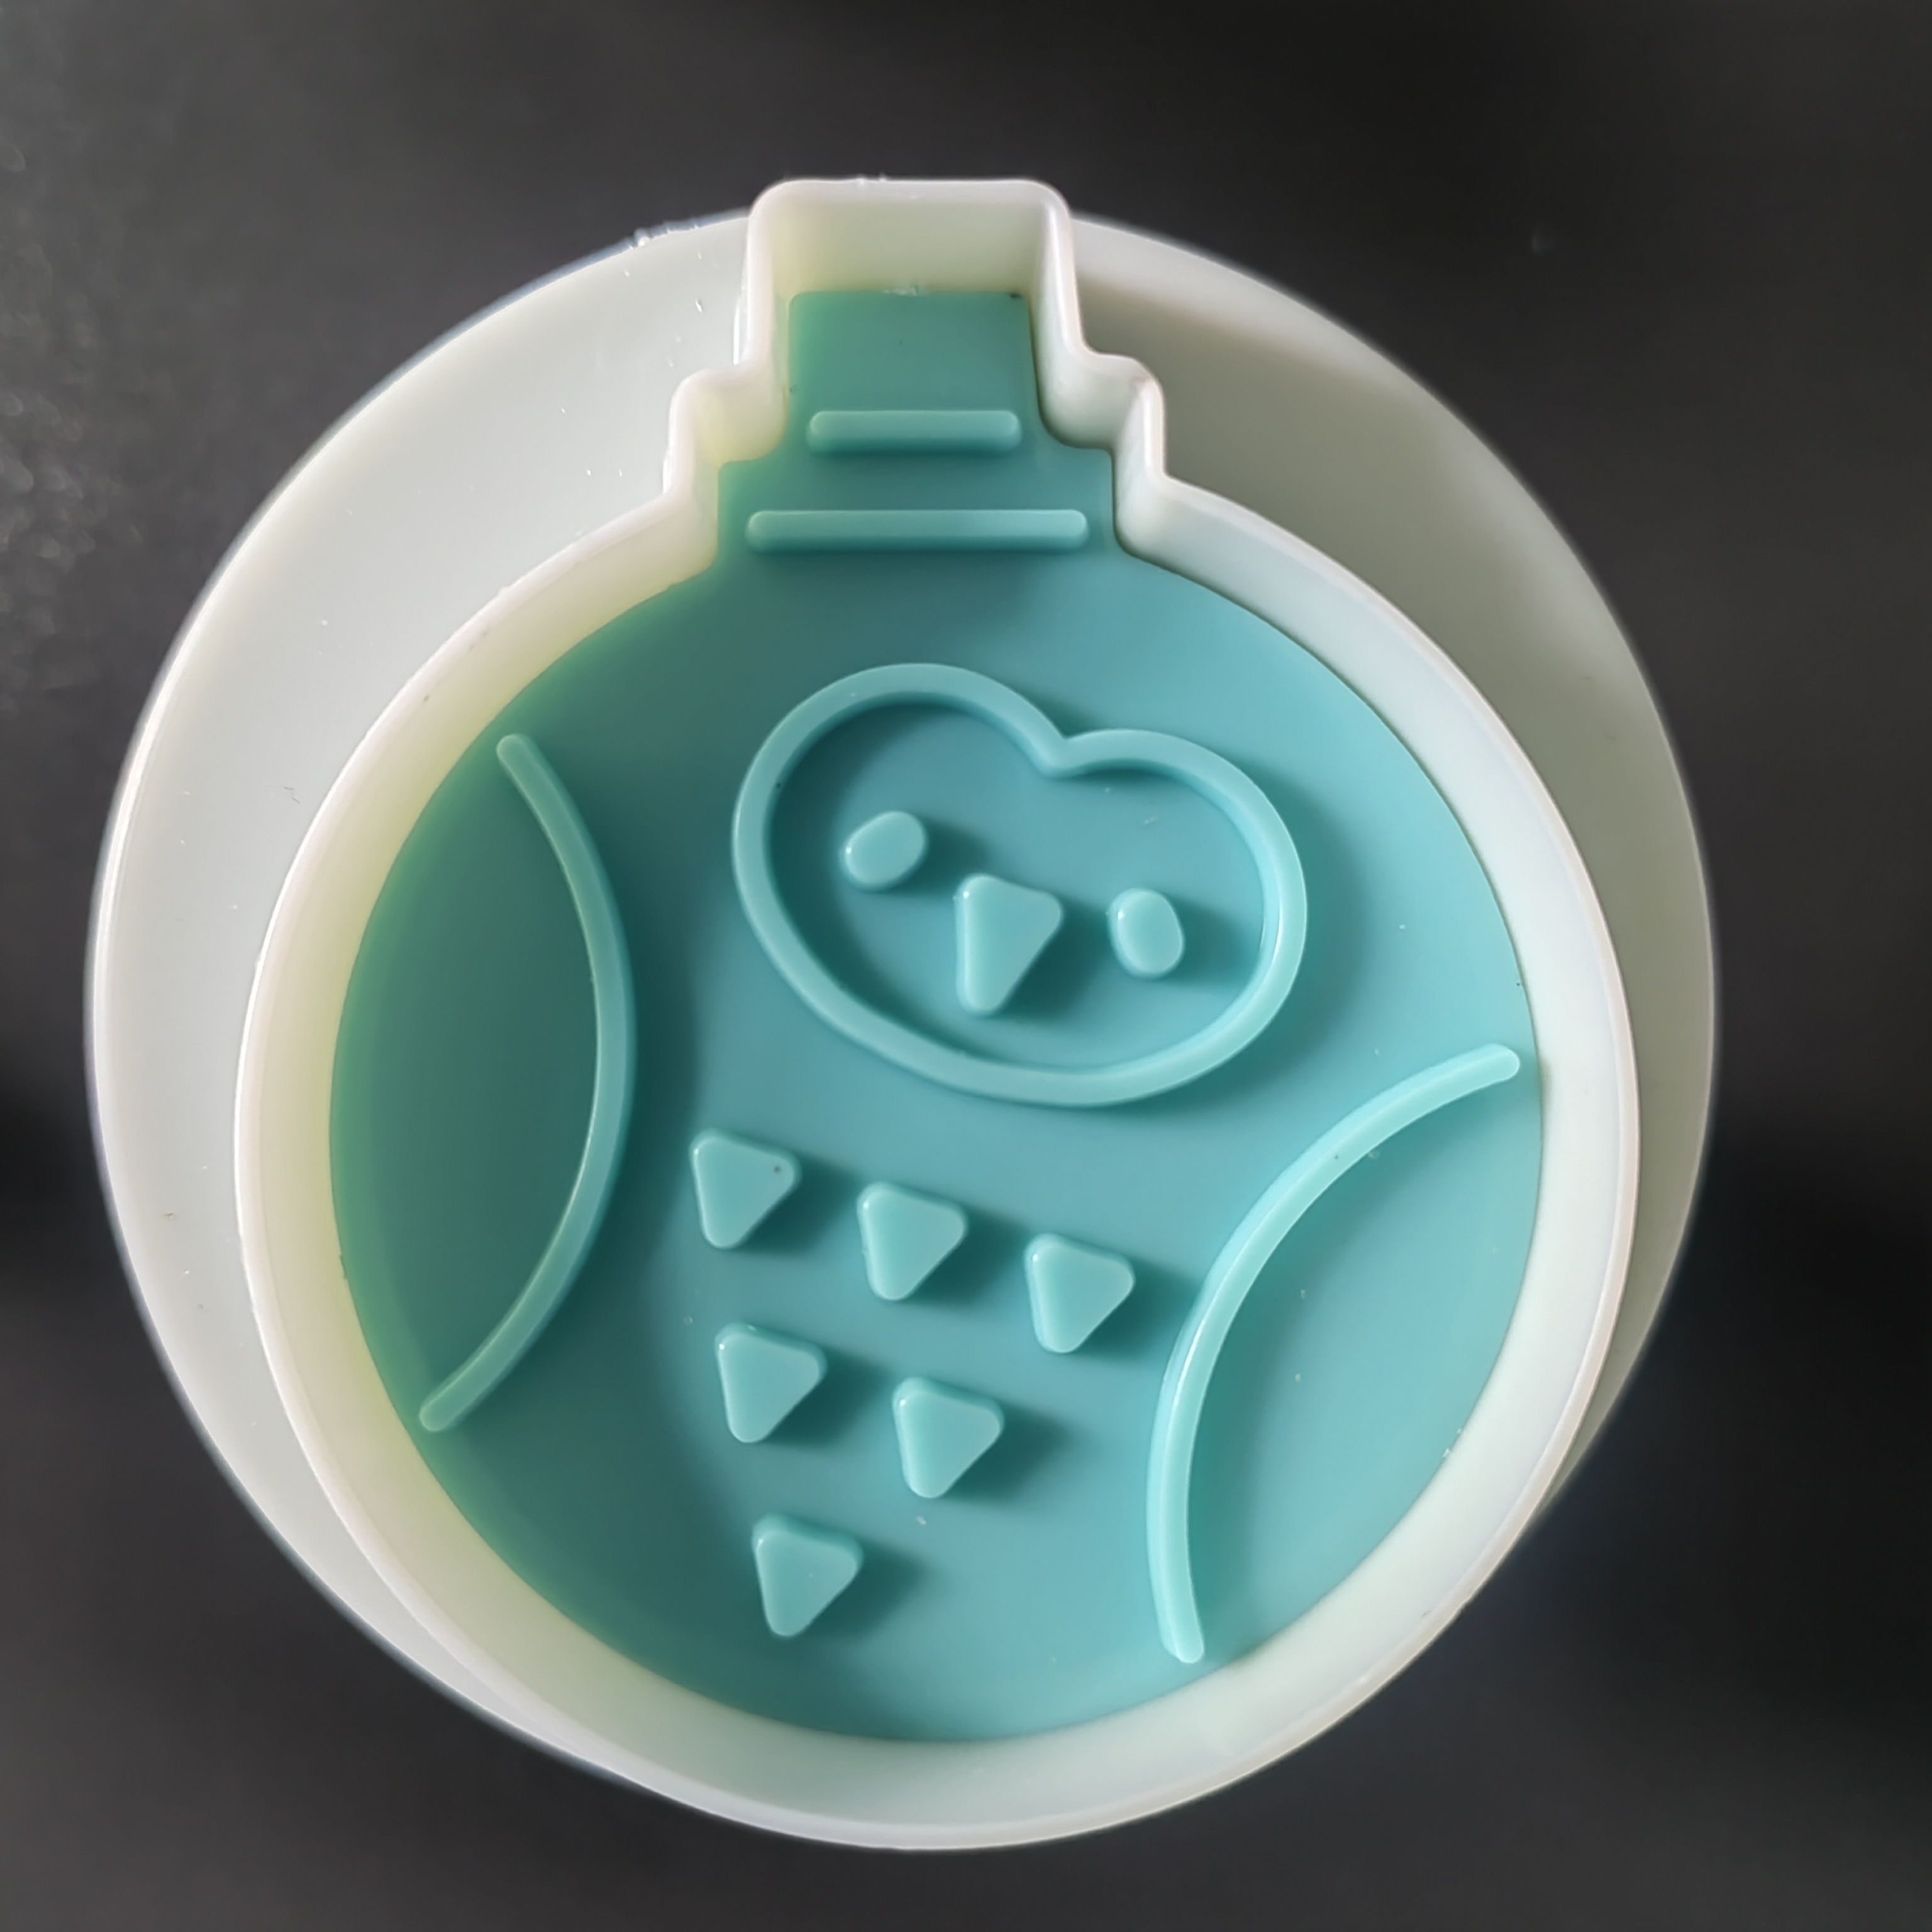 HB0151-6 Plastic 3pcs Ghost Series Cookie Molds set